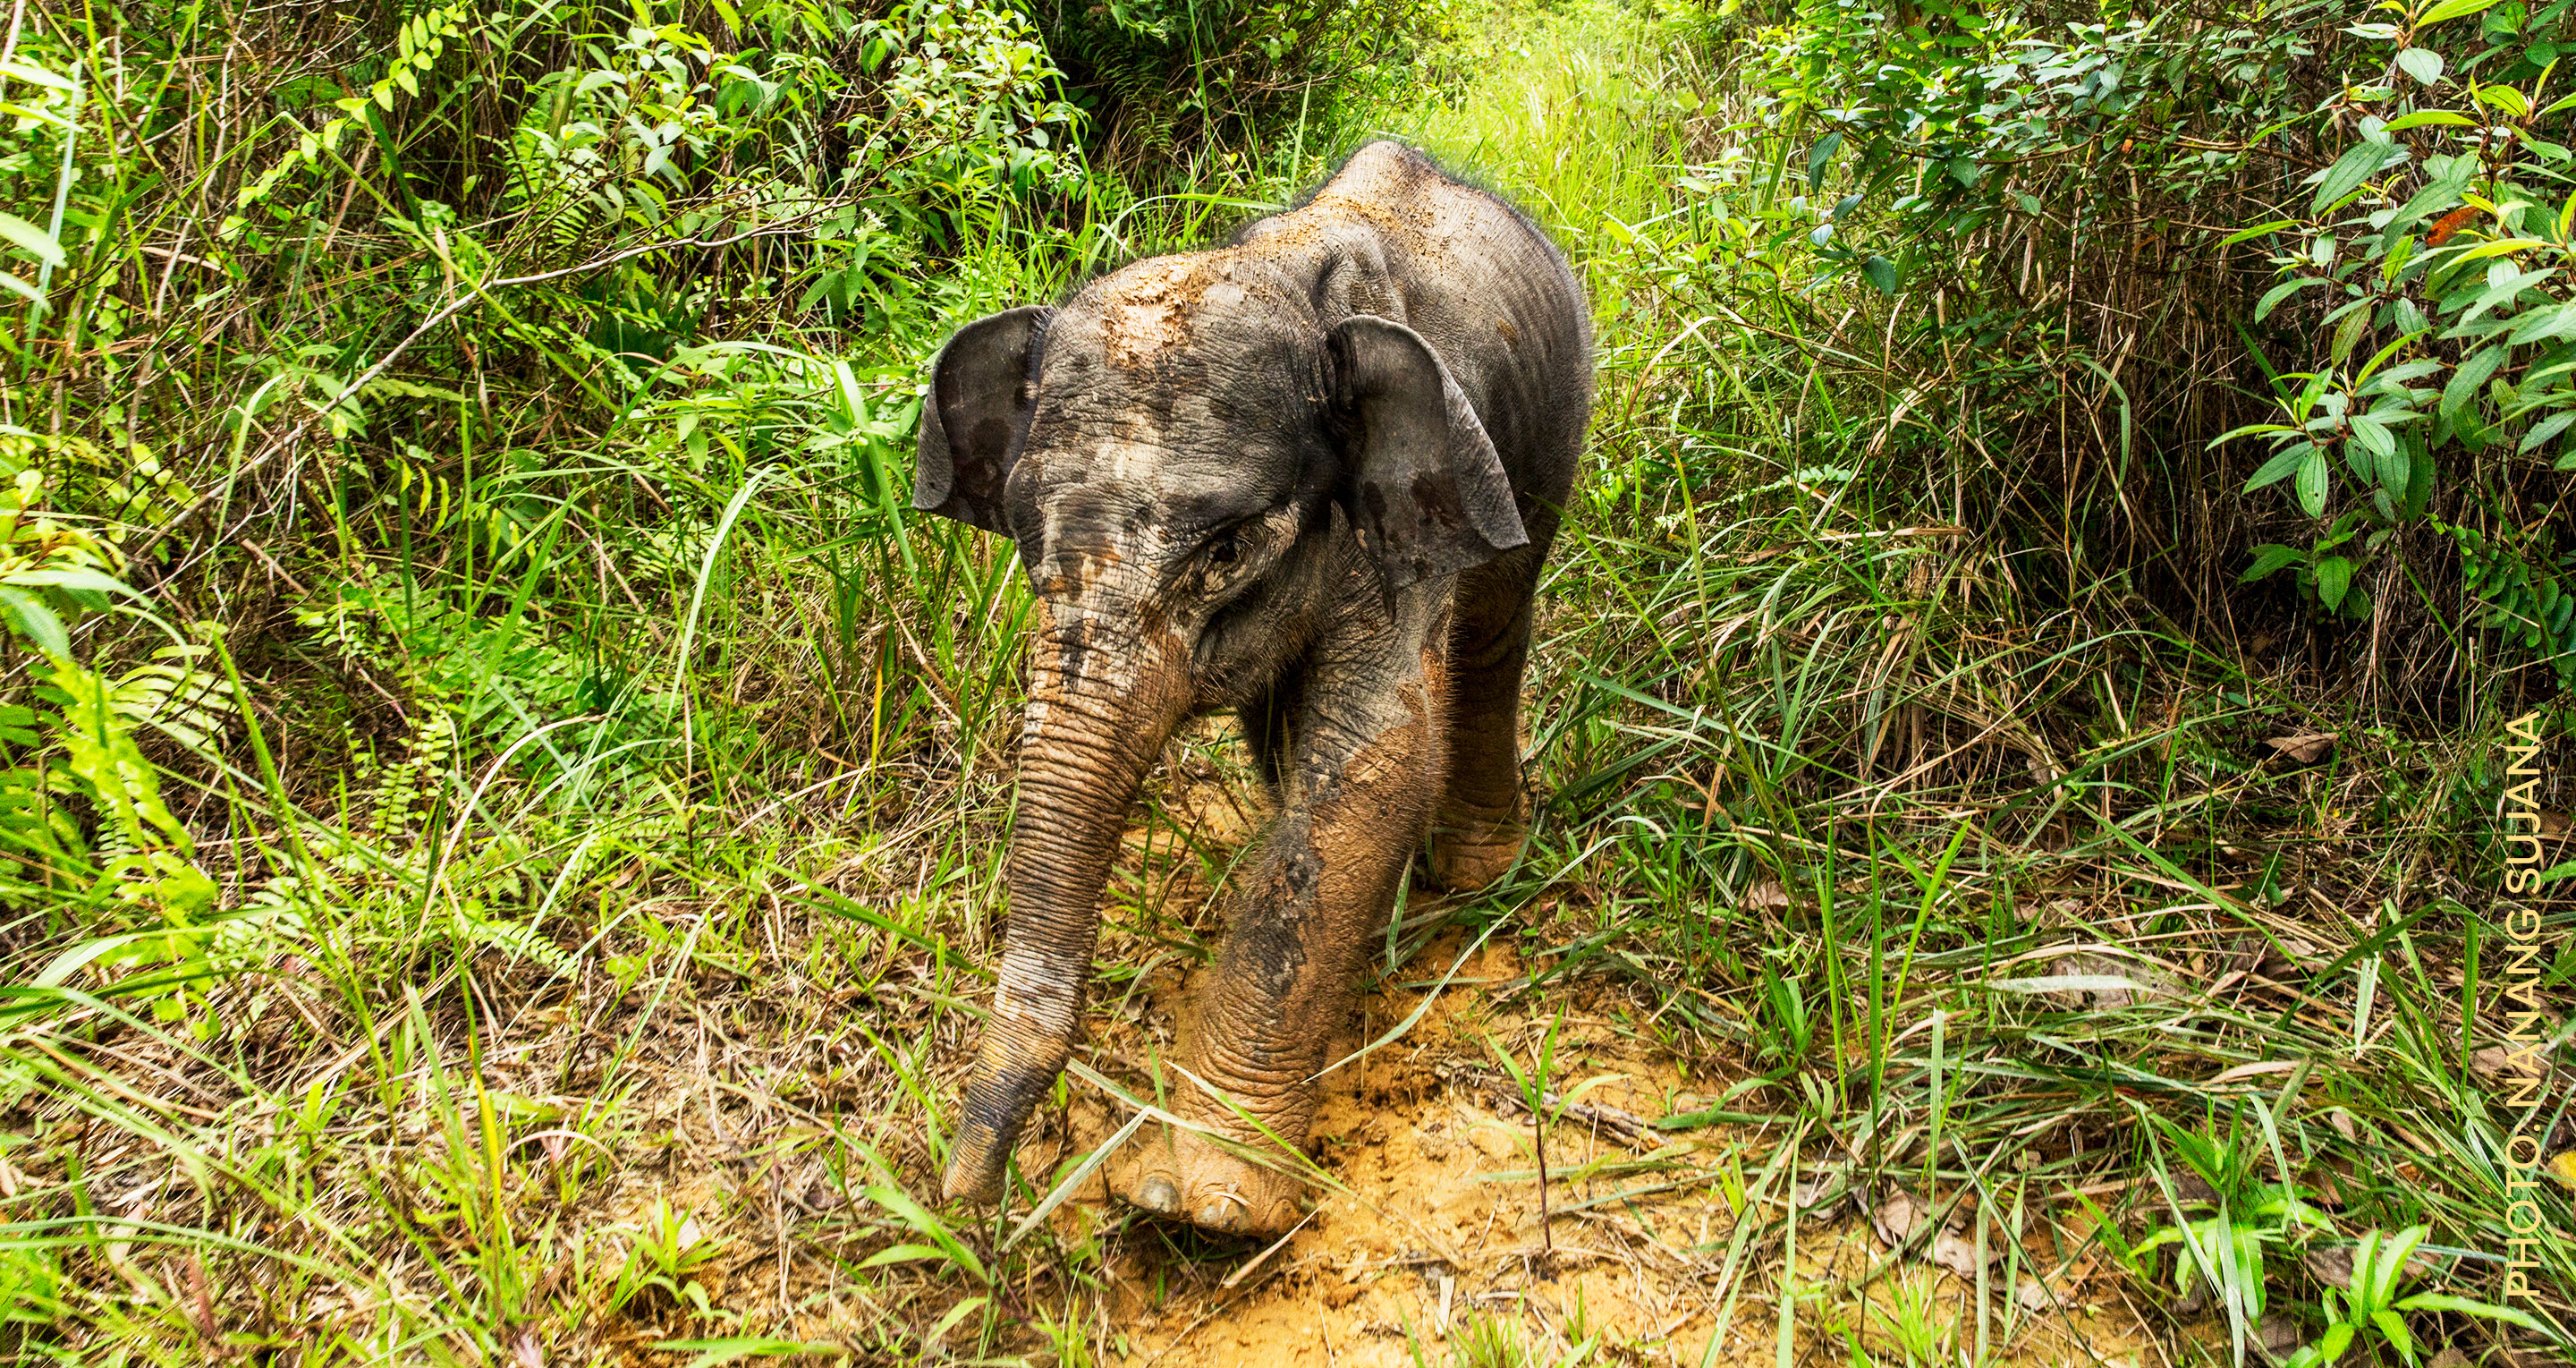 Baby elephant walking